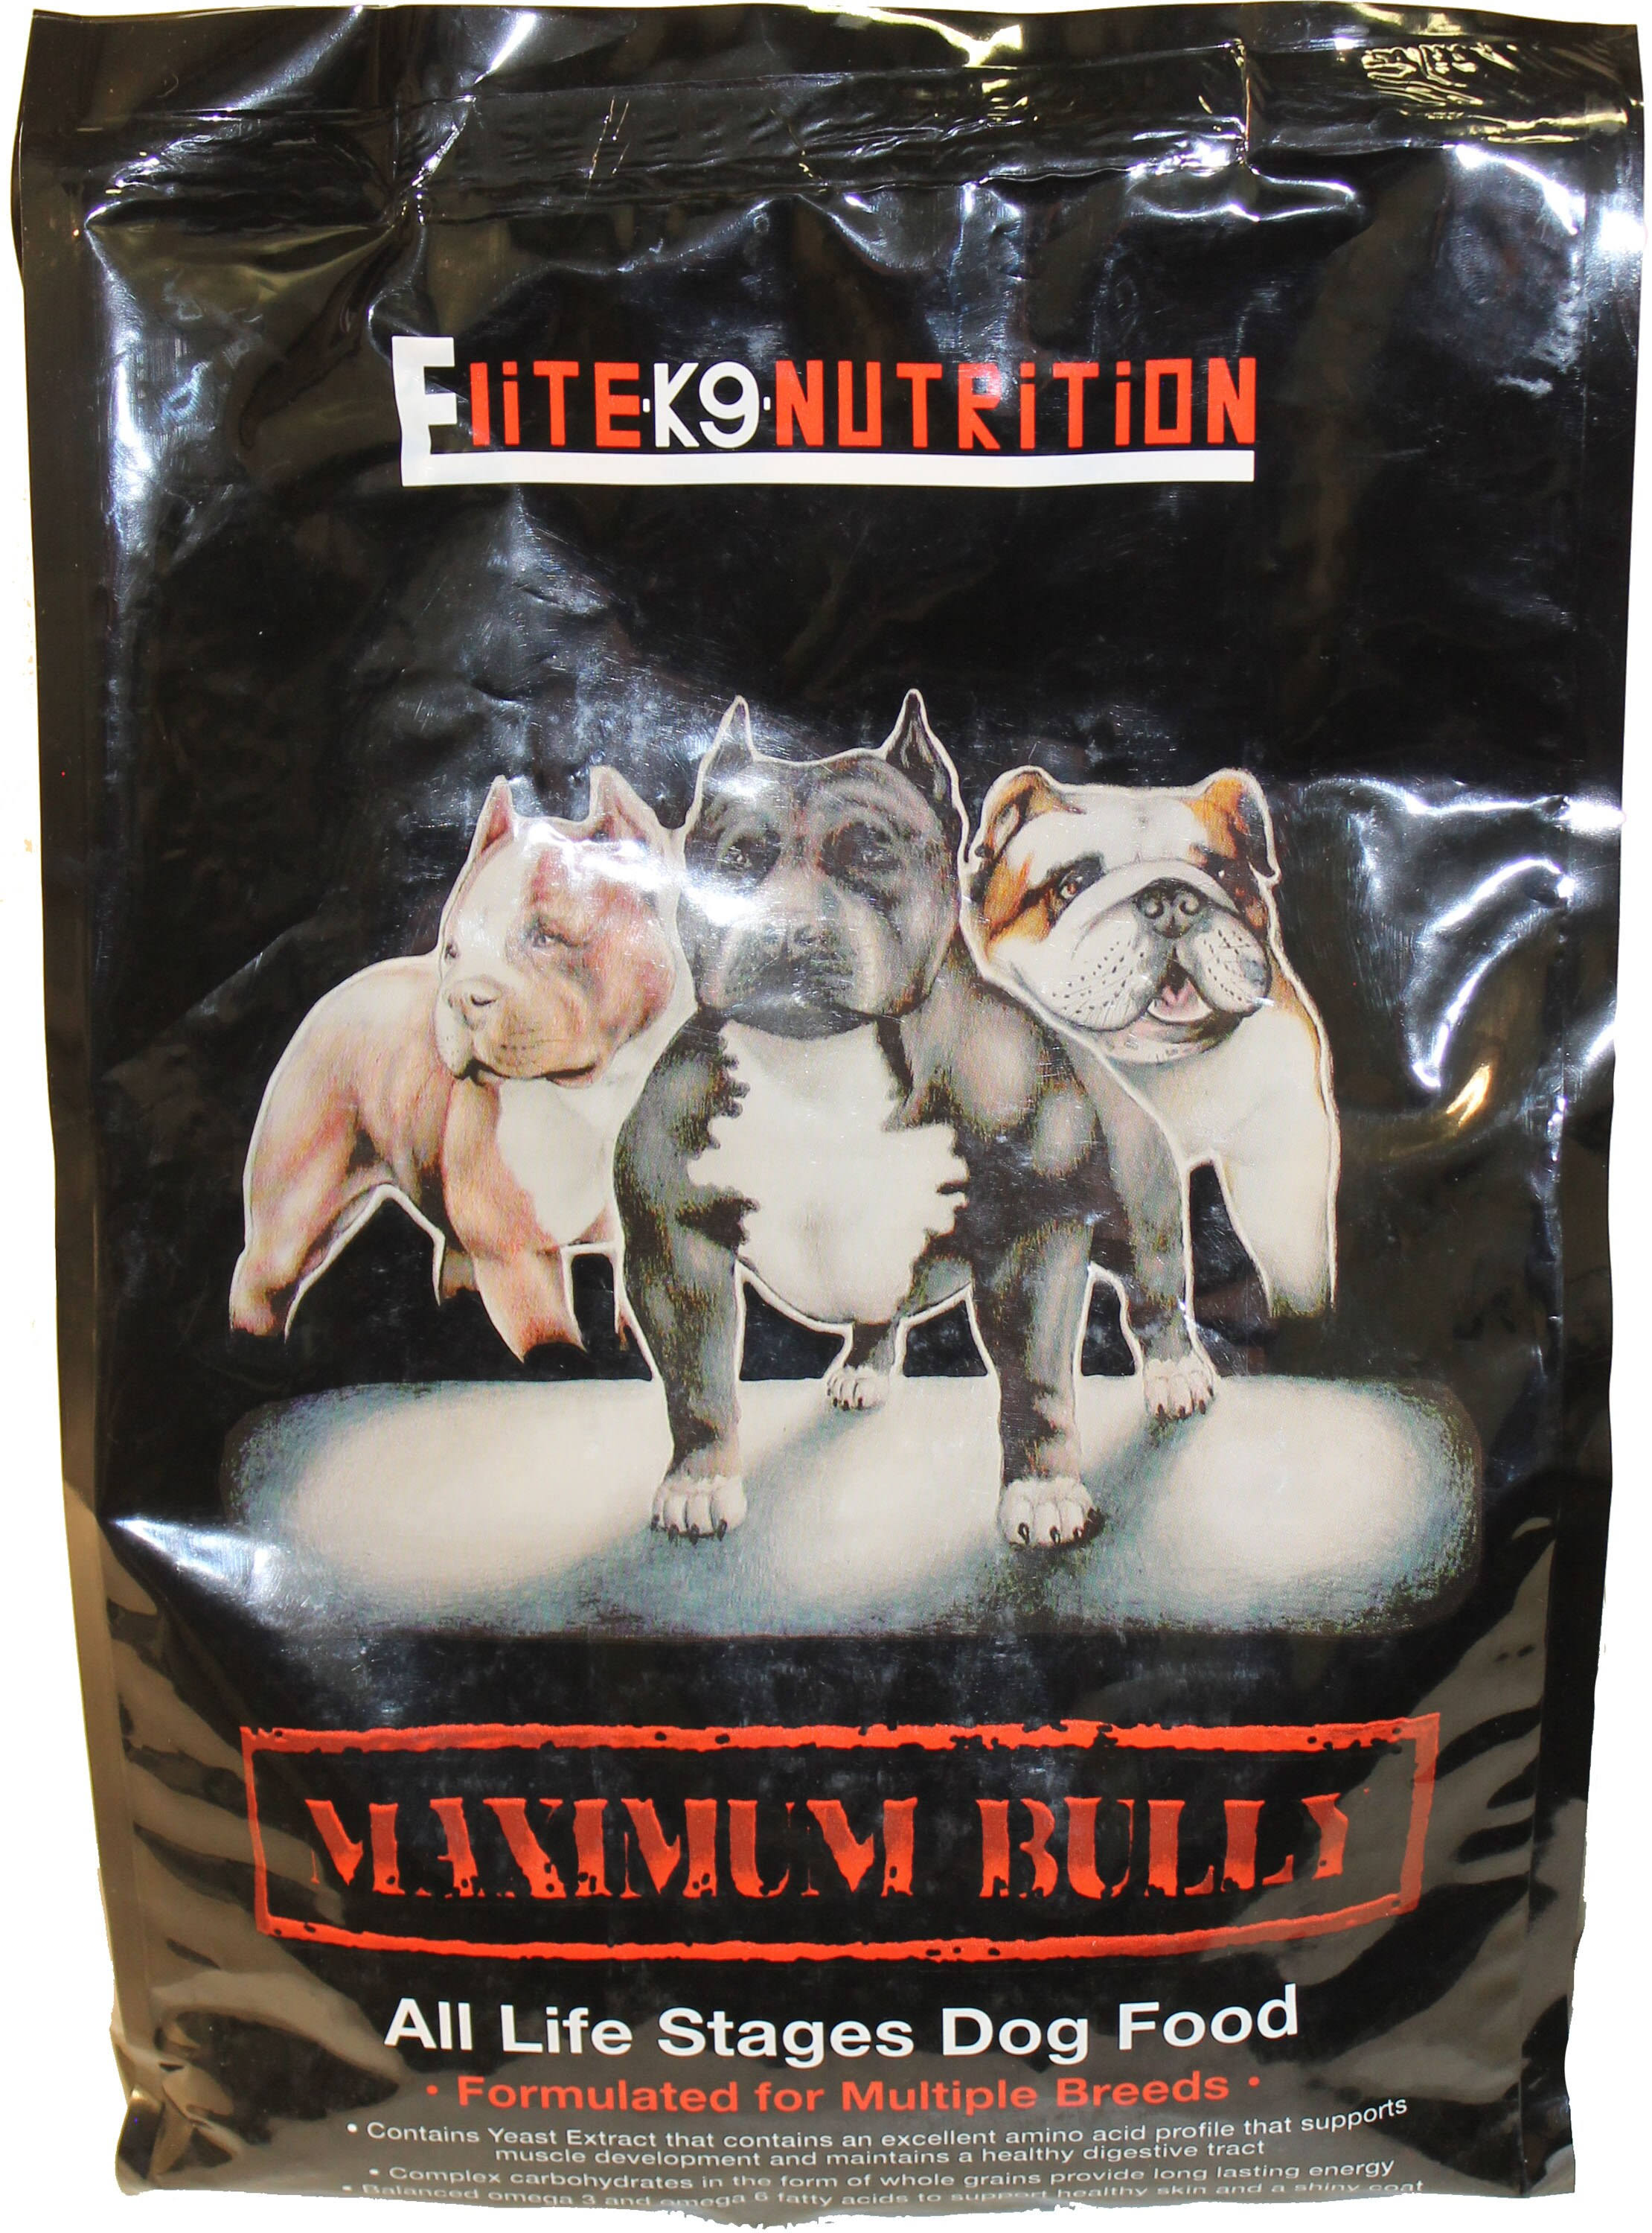 -Maximum Bully Dry Dog Food 5 lb